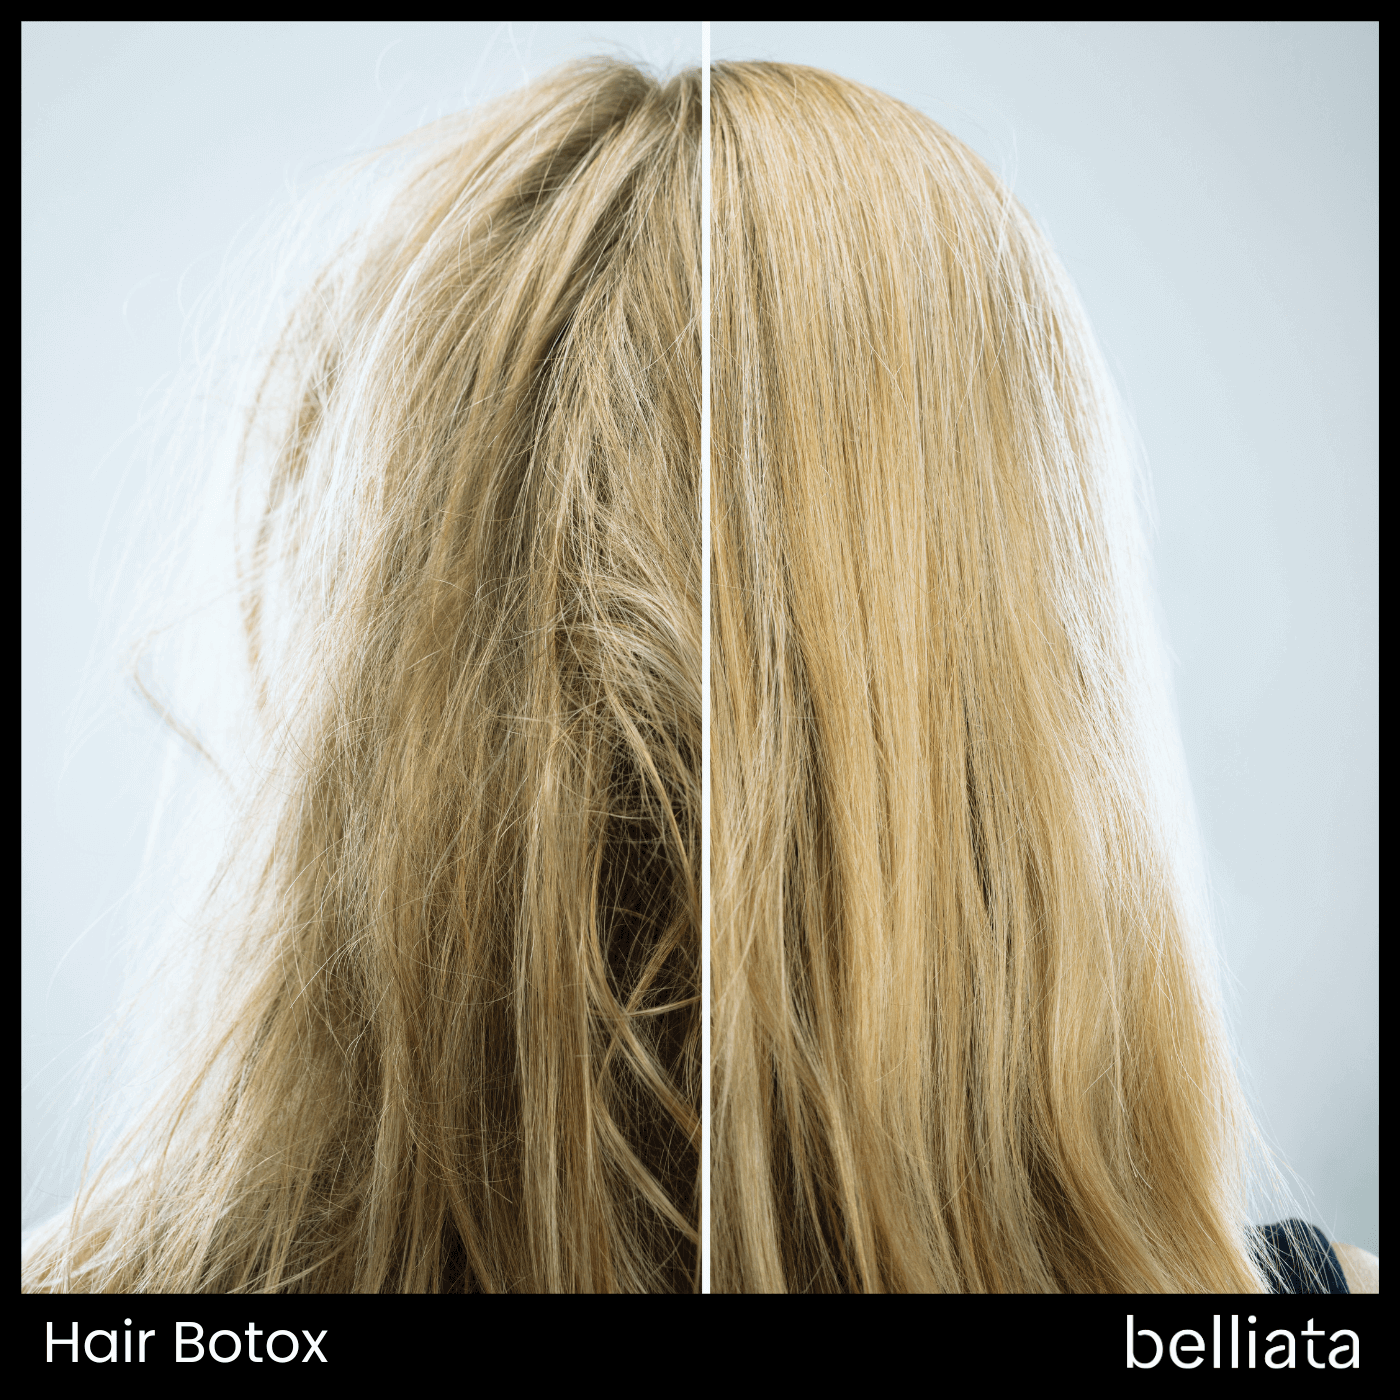 Hair Botox - Everything You Should Know | belliata.com